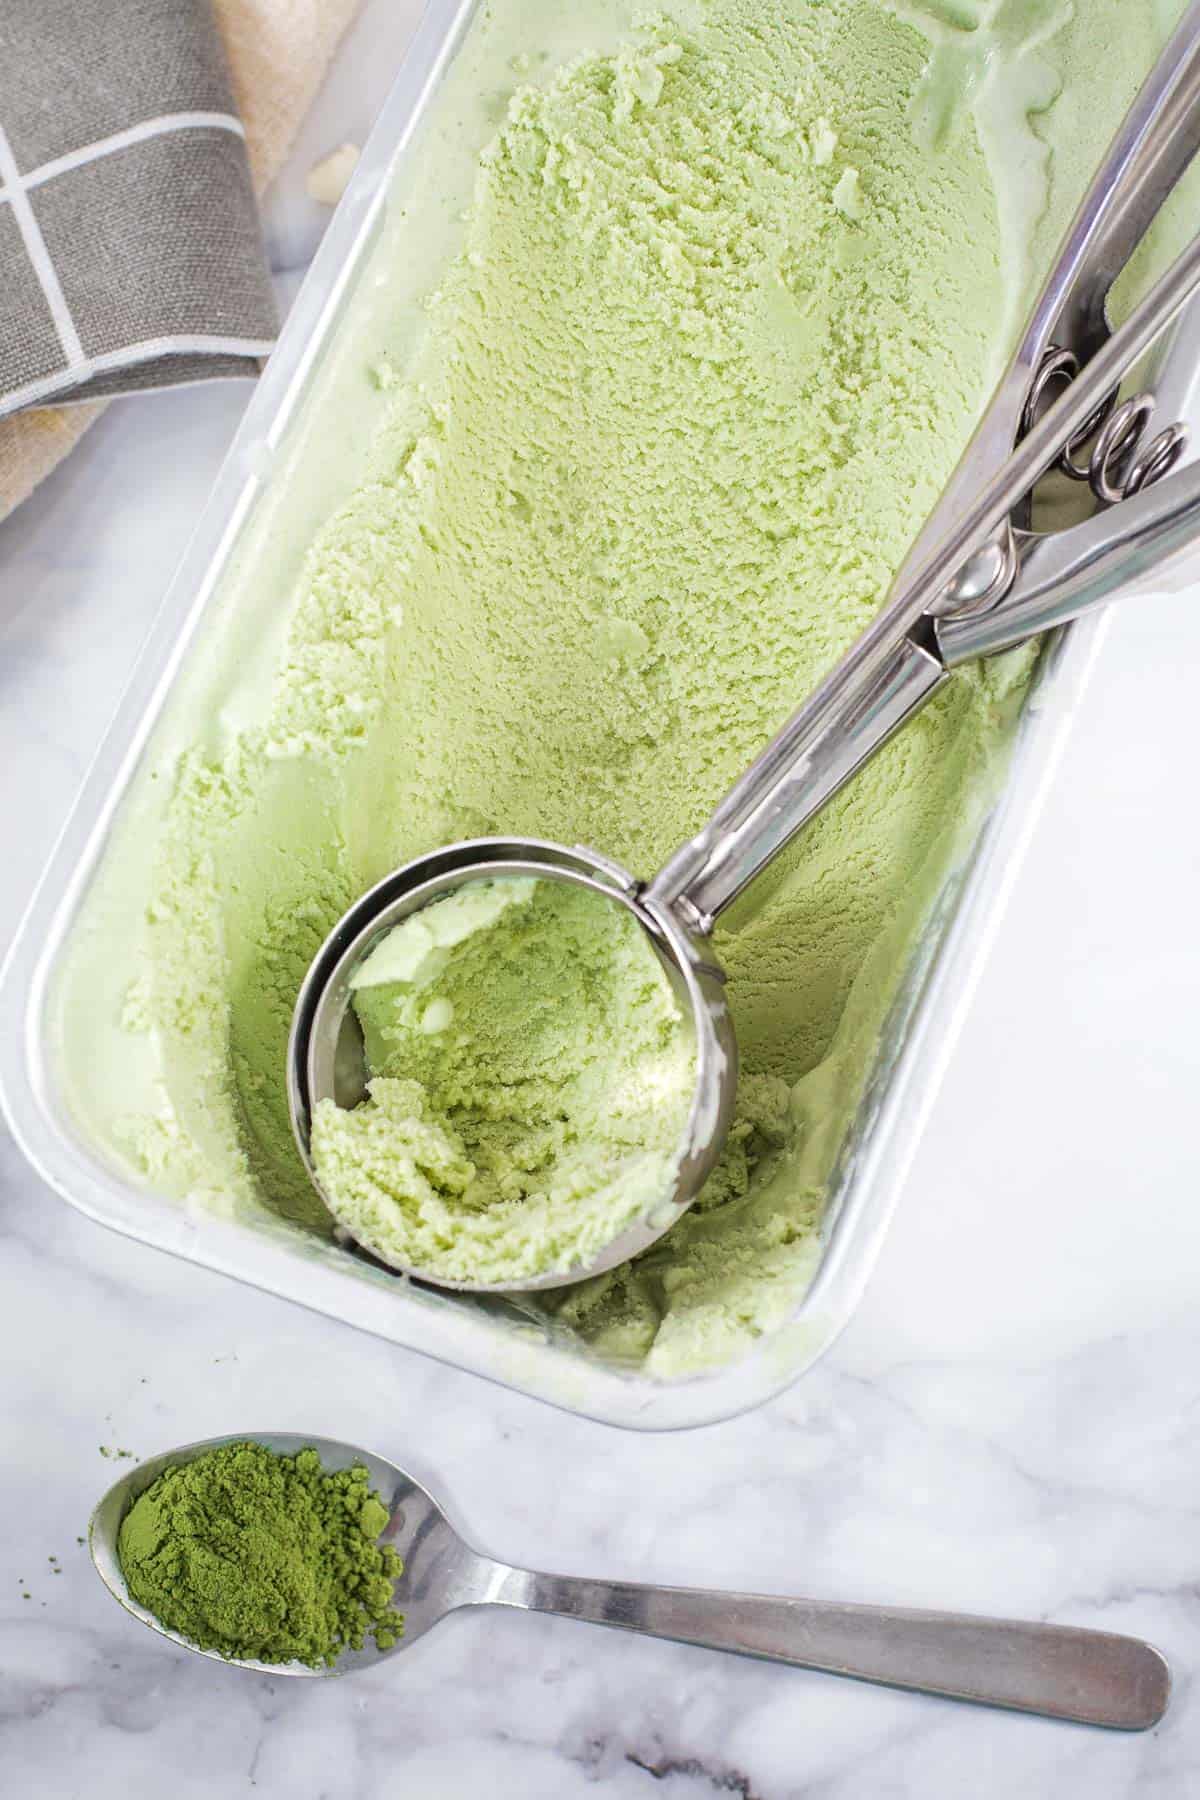 A ice cream scoop in a tub of green tea ice cream